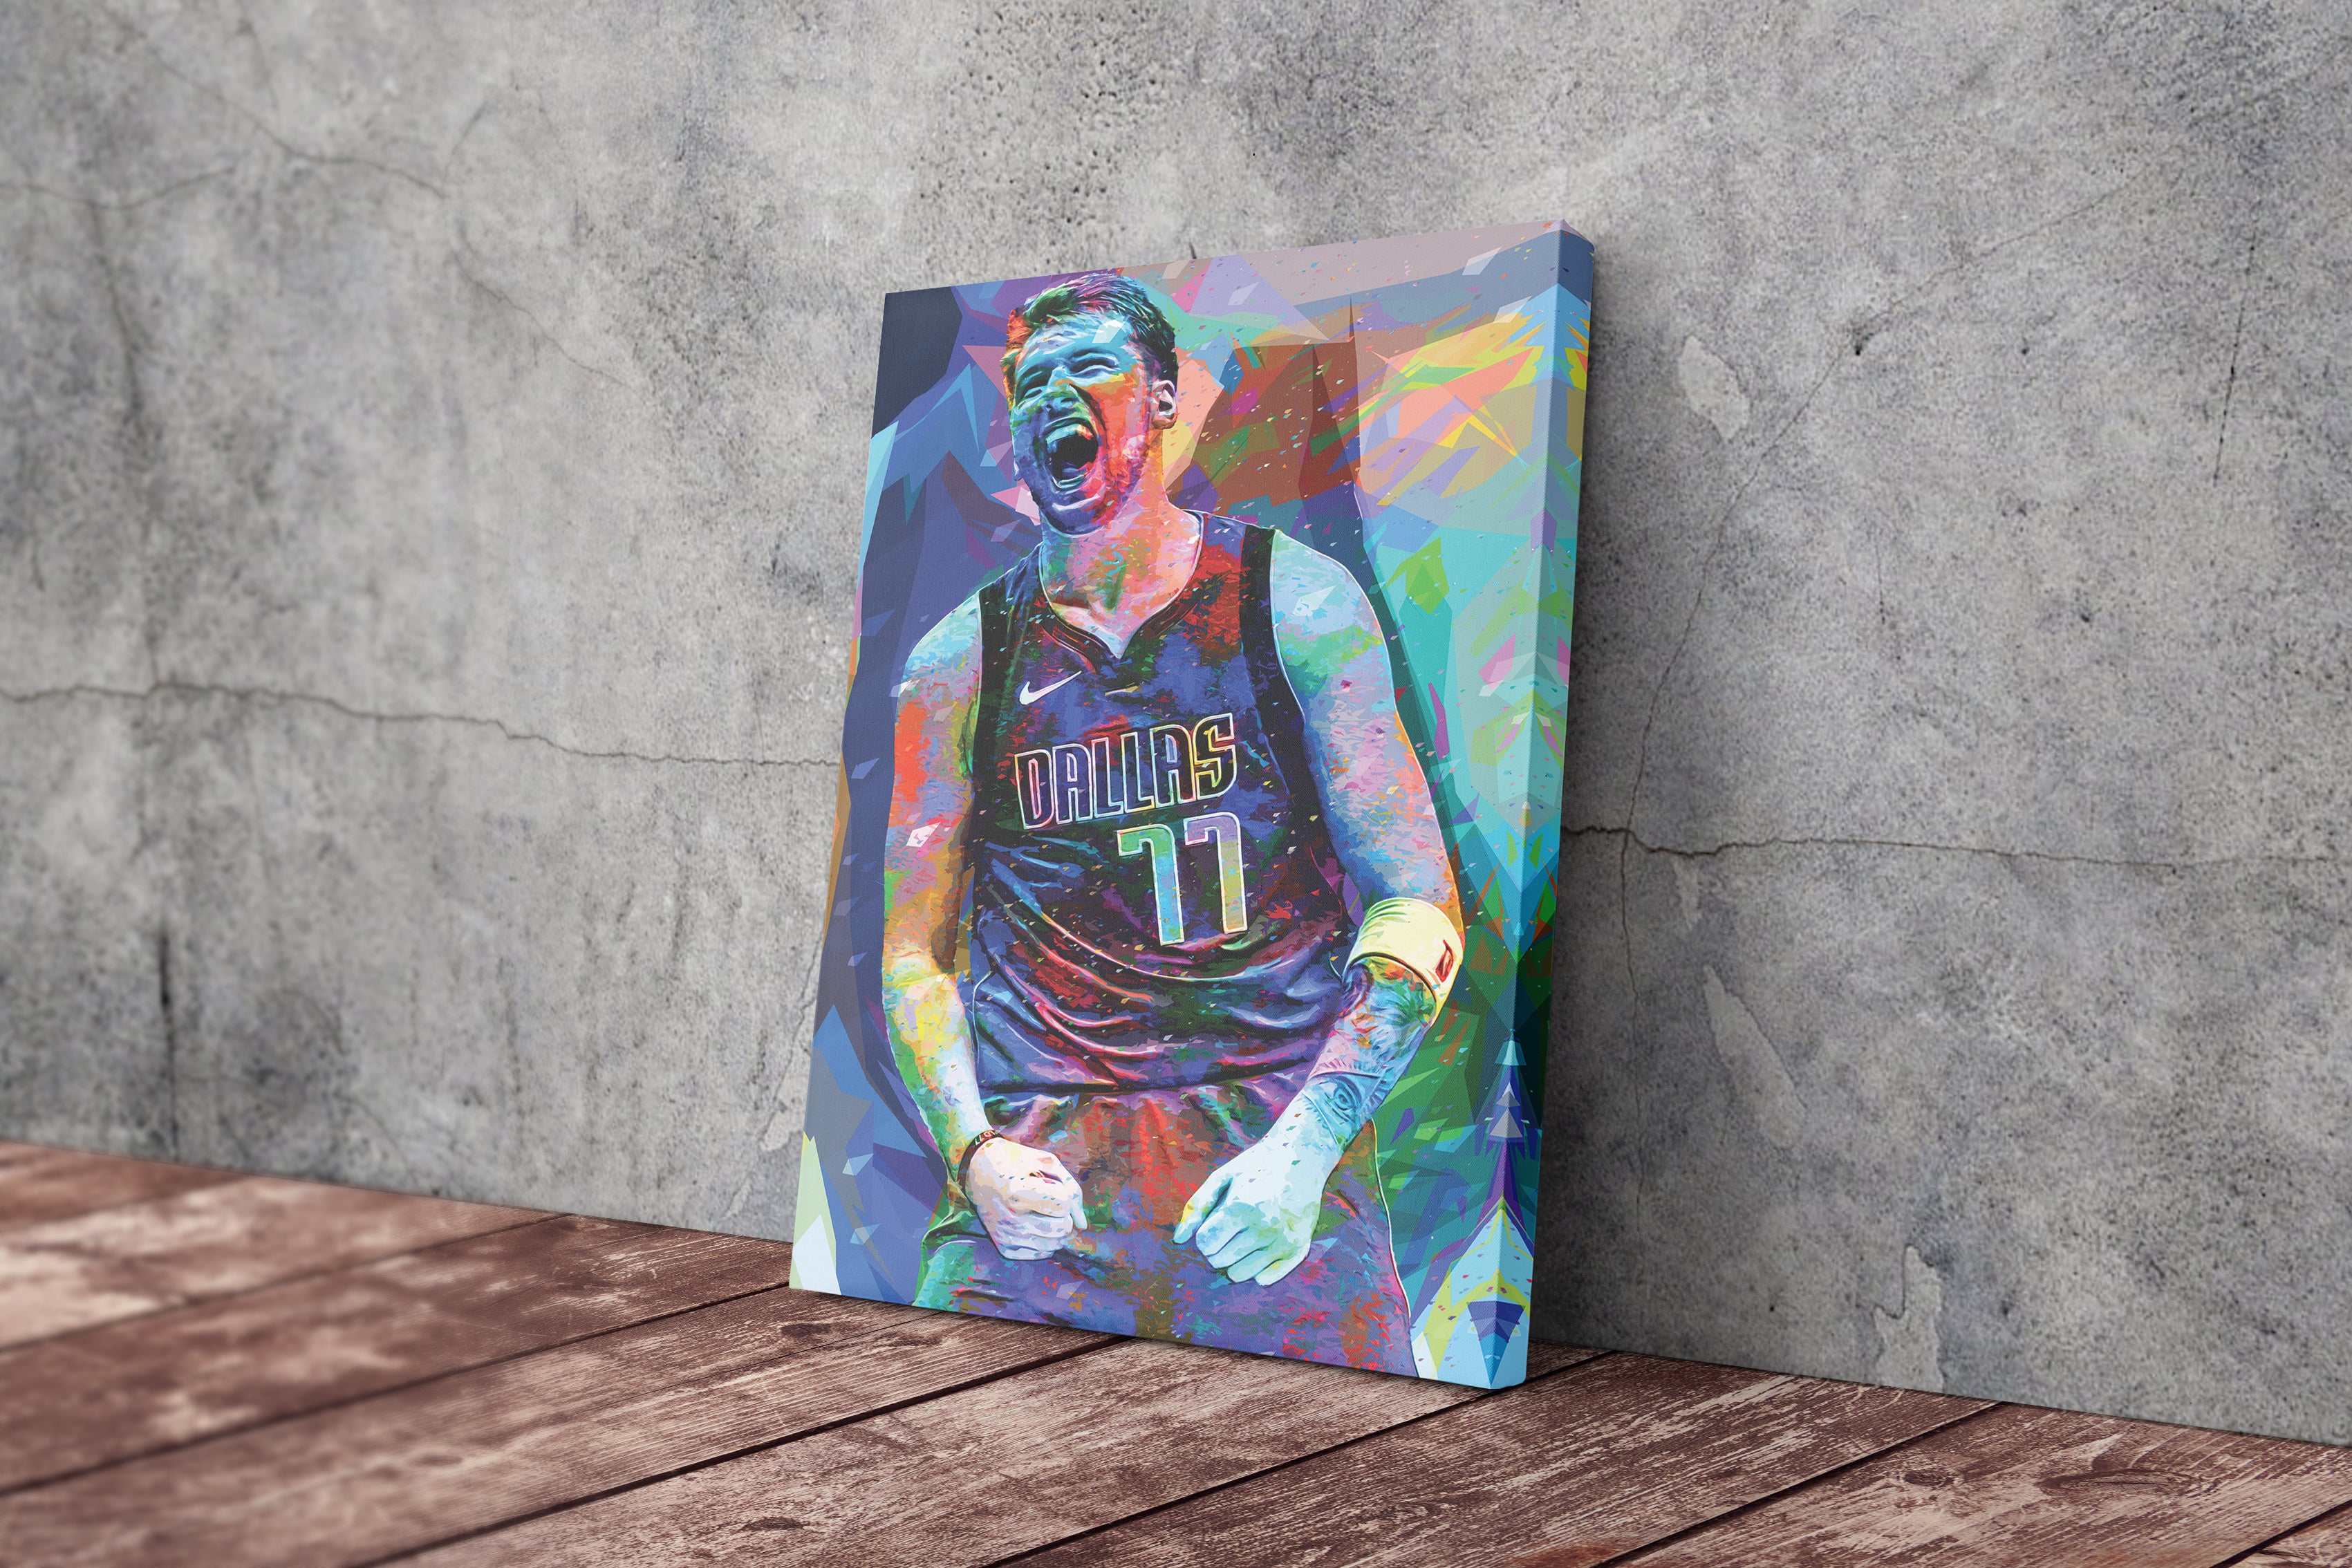 Luka Doncic Dallas Basketball Star Wall Art Home Decor - POSTER 20x30